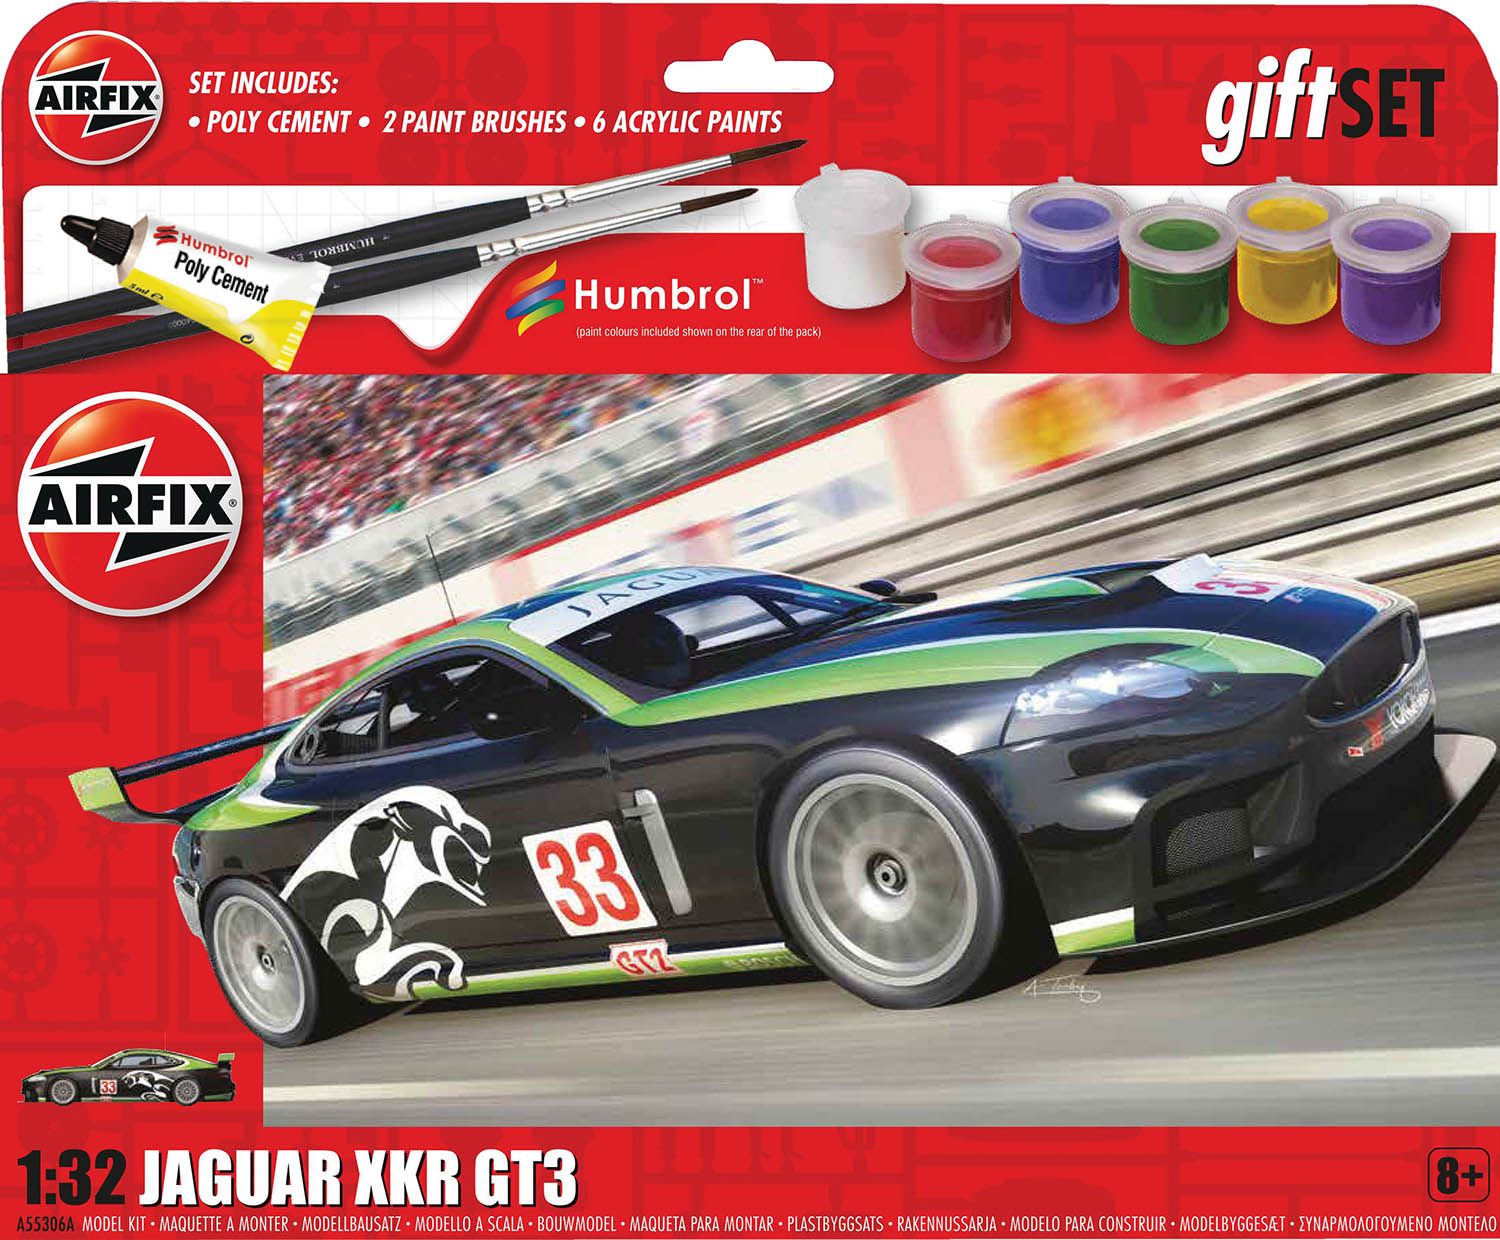 A55306A Gift Set - Jaguar XKR GT3